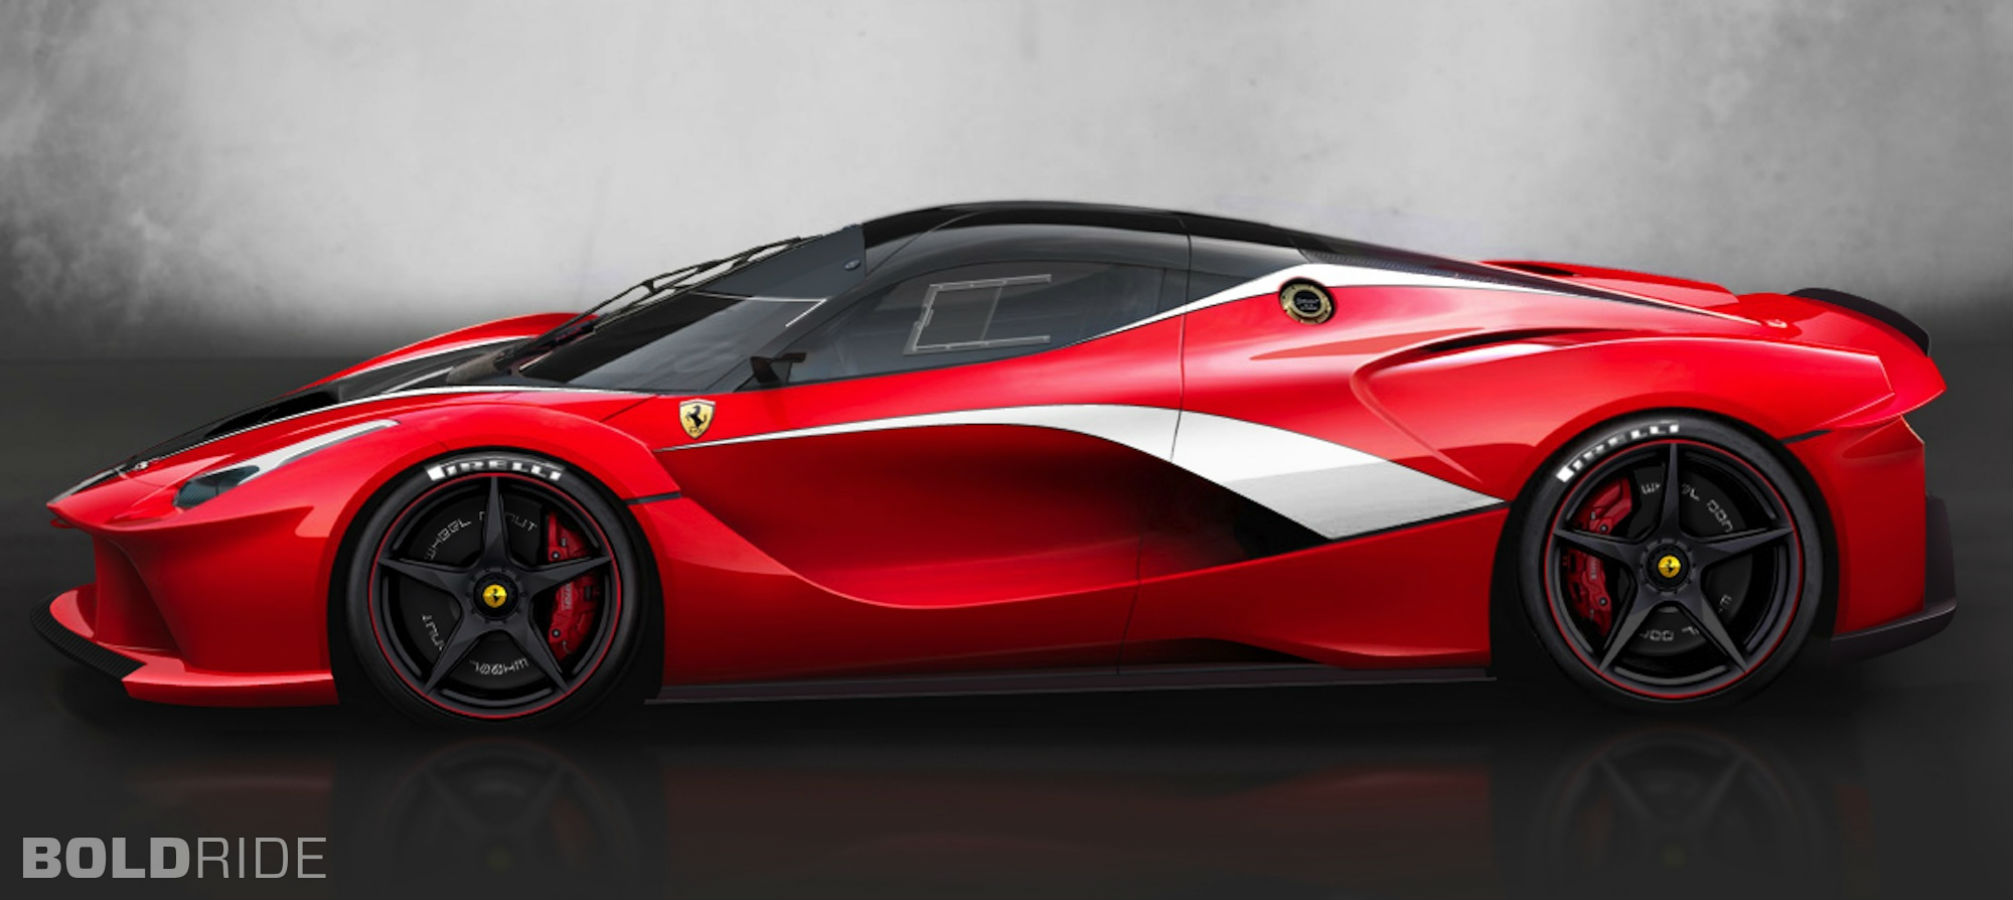 2013, Ferrari, Laferrari, Xfx, Concept, Supercar Wallpaper